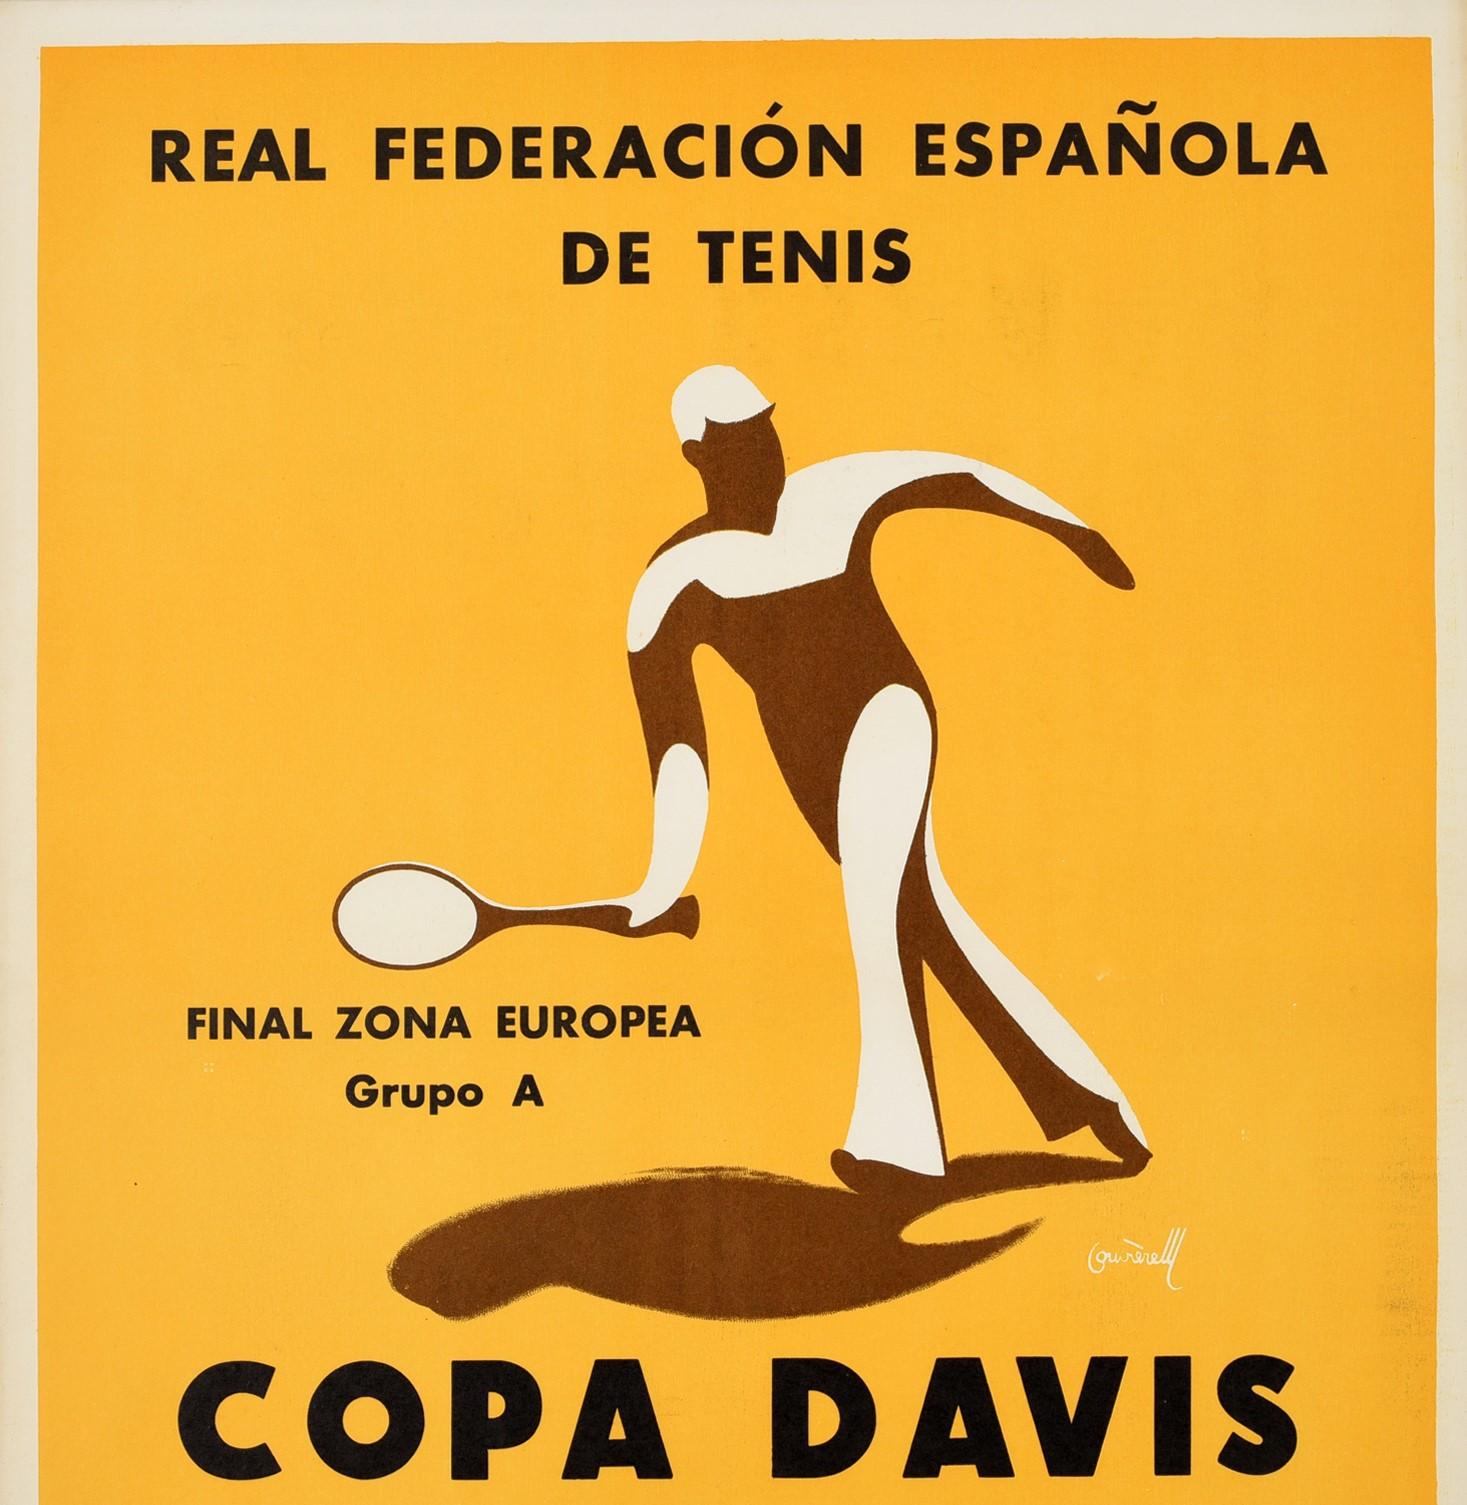 Original Vintage 1967 Copa Davis Cup Tennis Poster Sport USSR Spain URSS Espana  - Print by Courerell